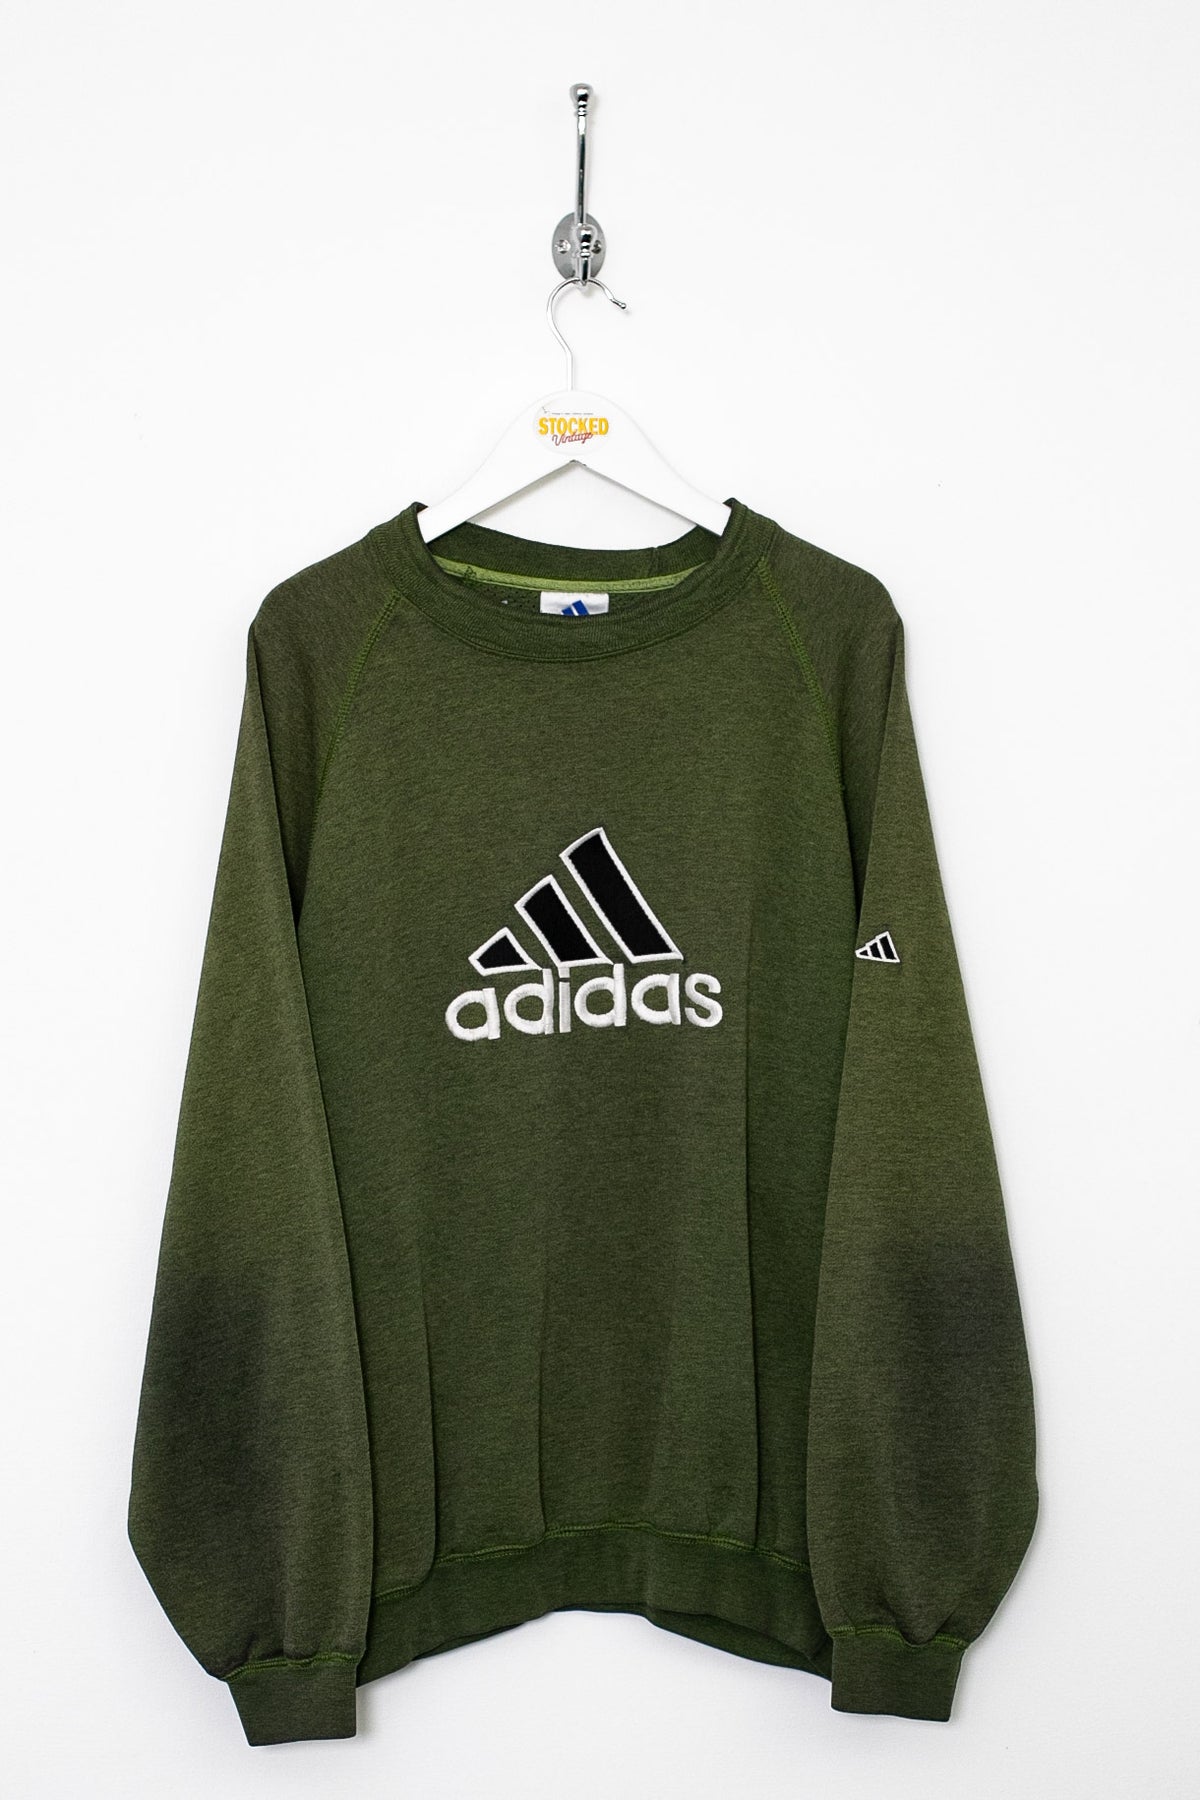 00s Adidas Sweatshirt (M)